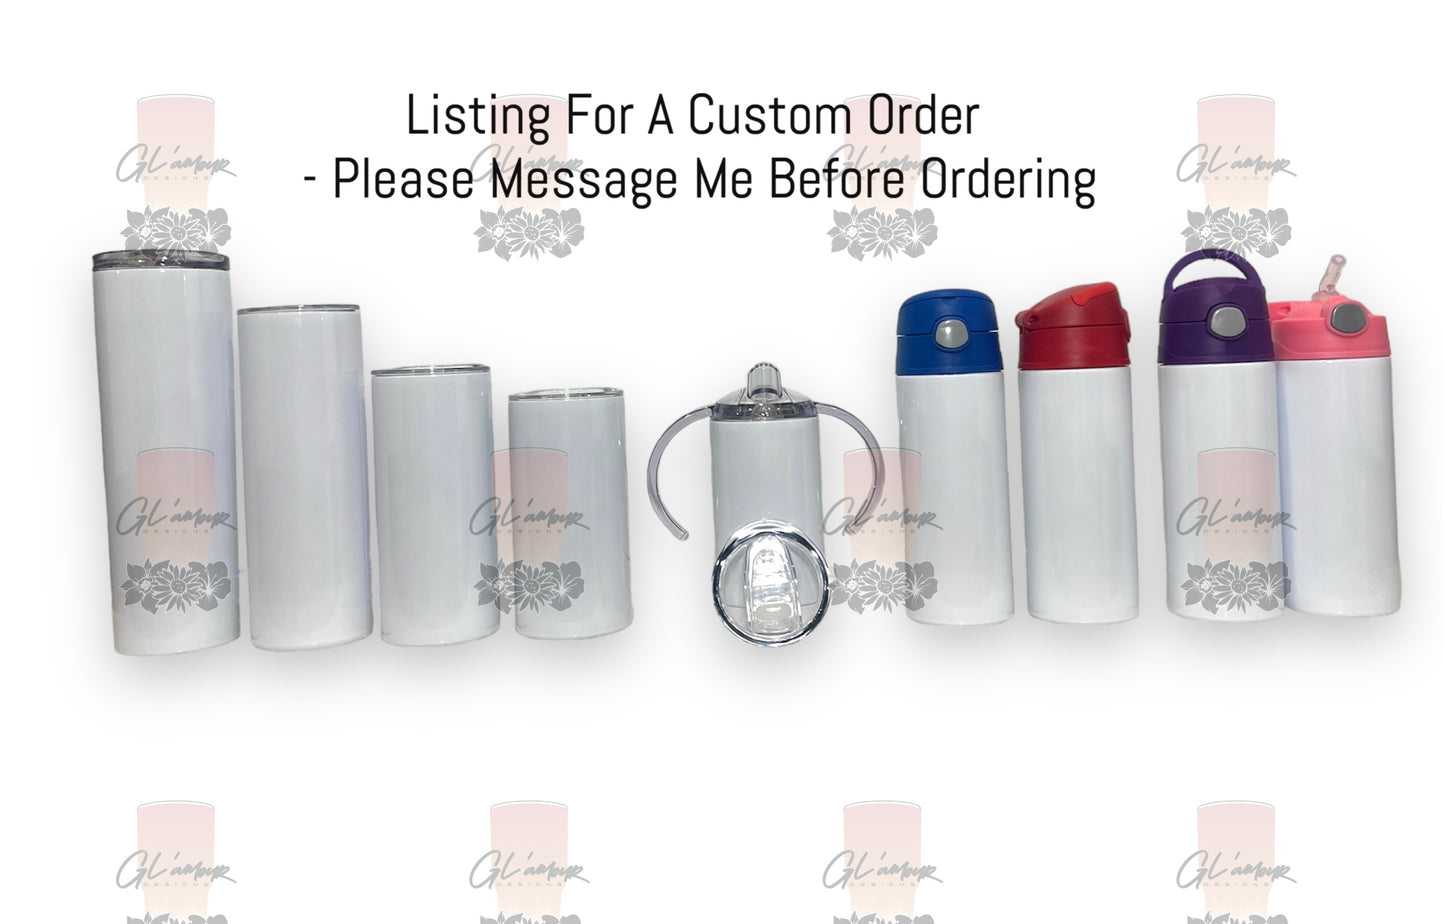 Custom Order Request